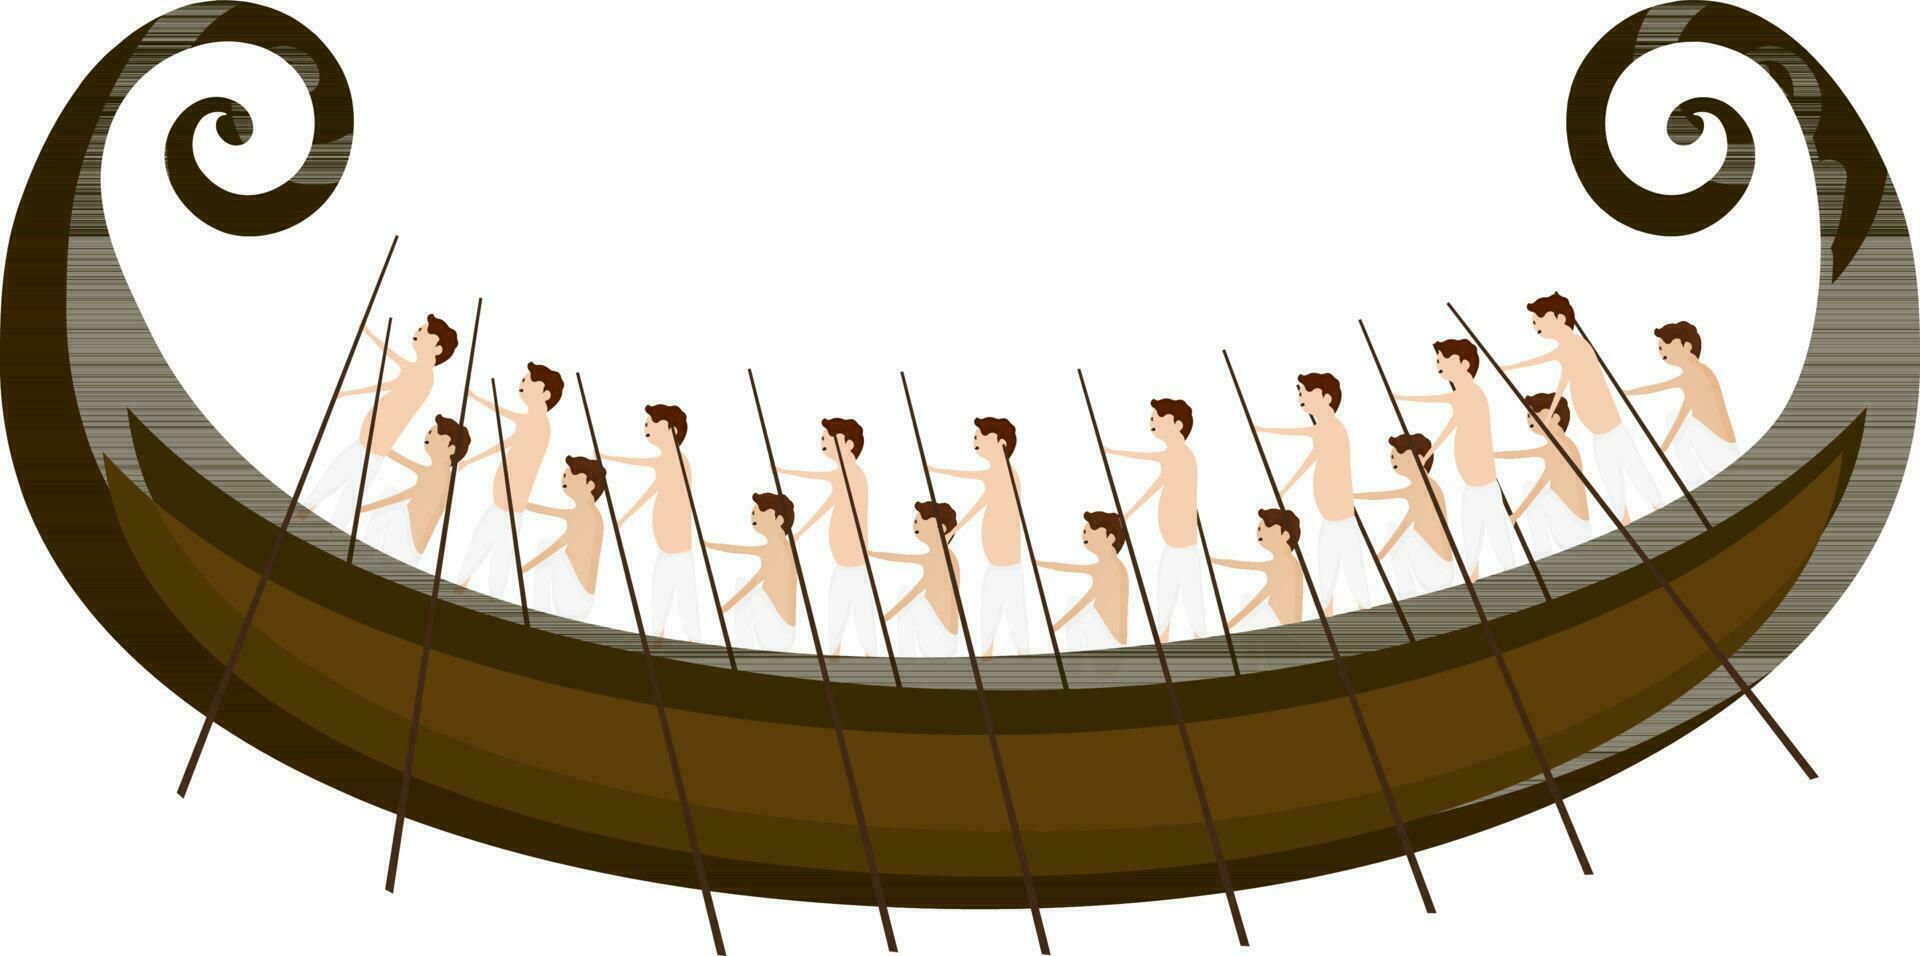 illustration de rameurs aviron serpent bateau. vecteur